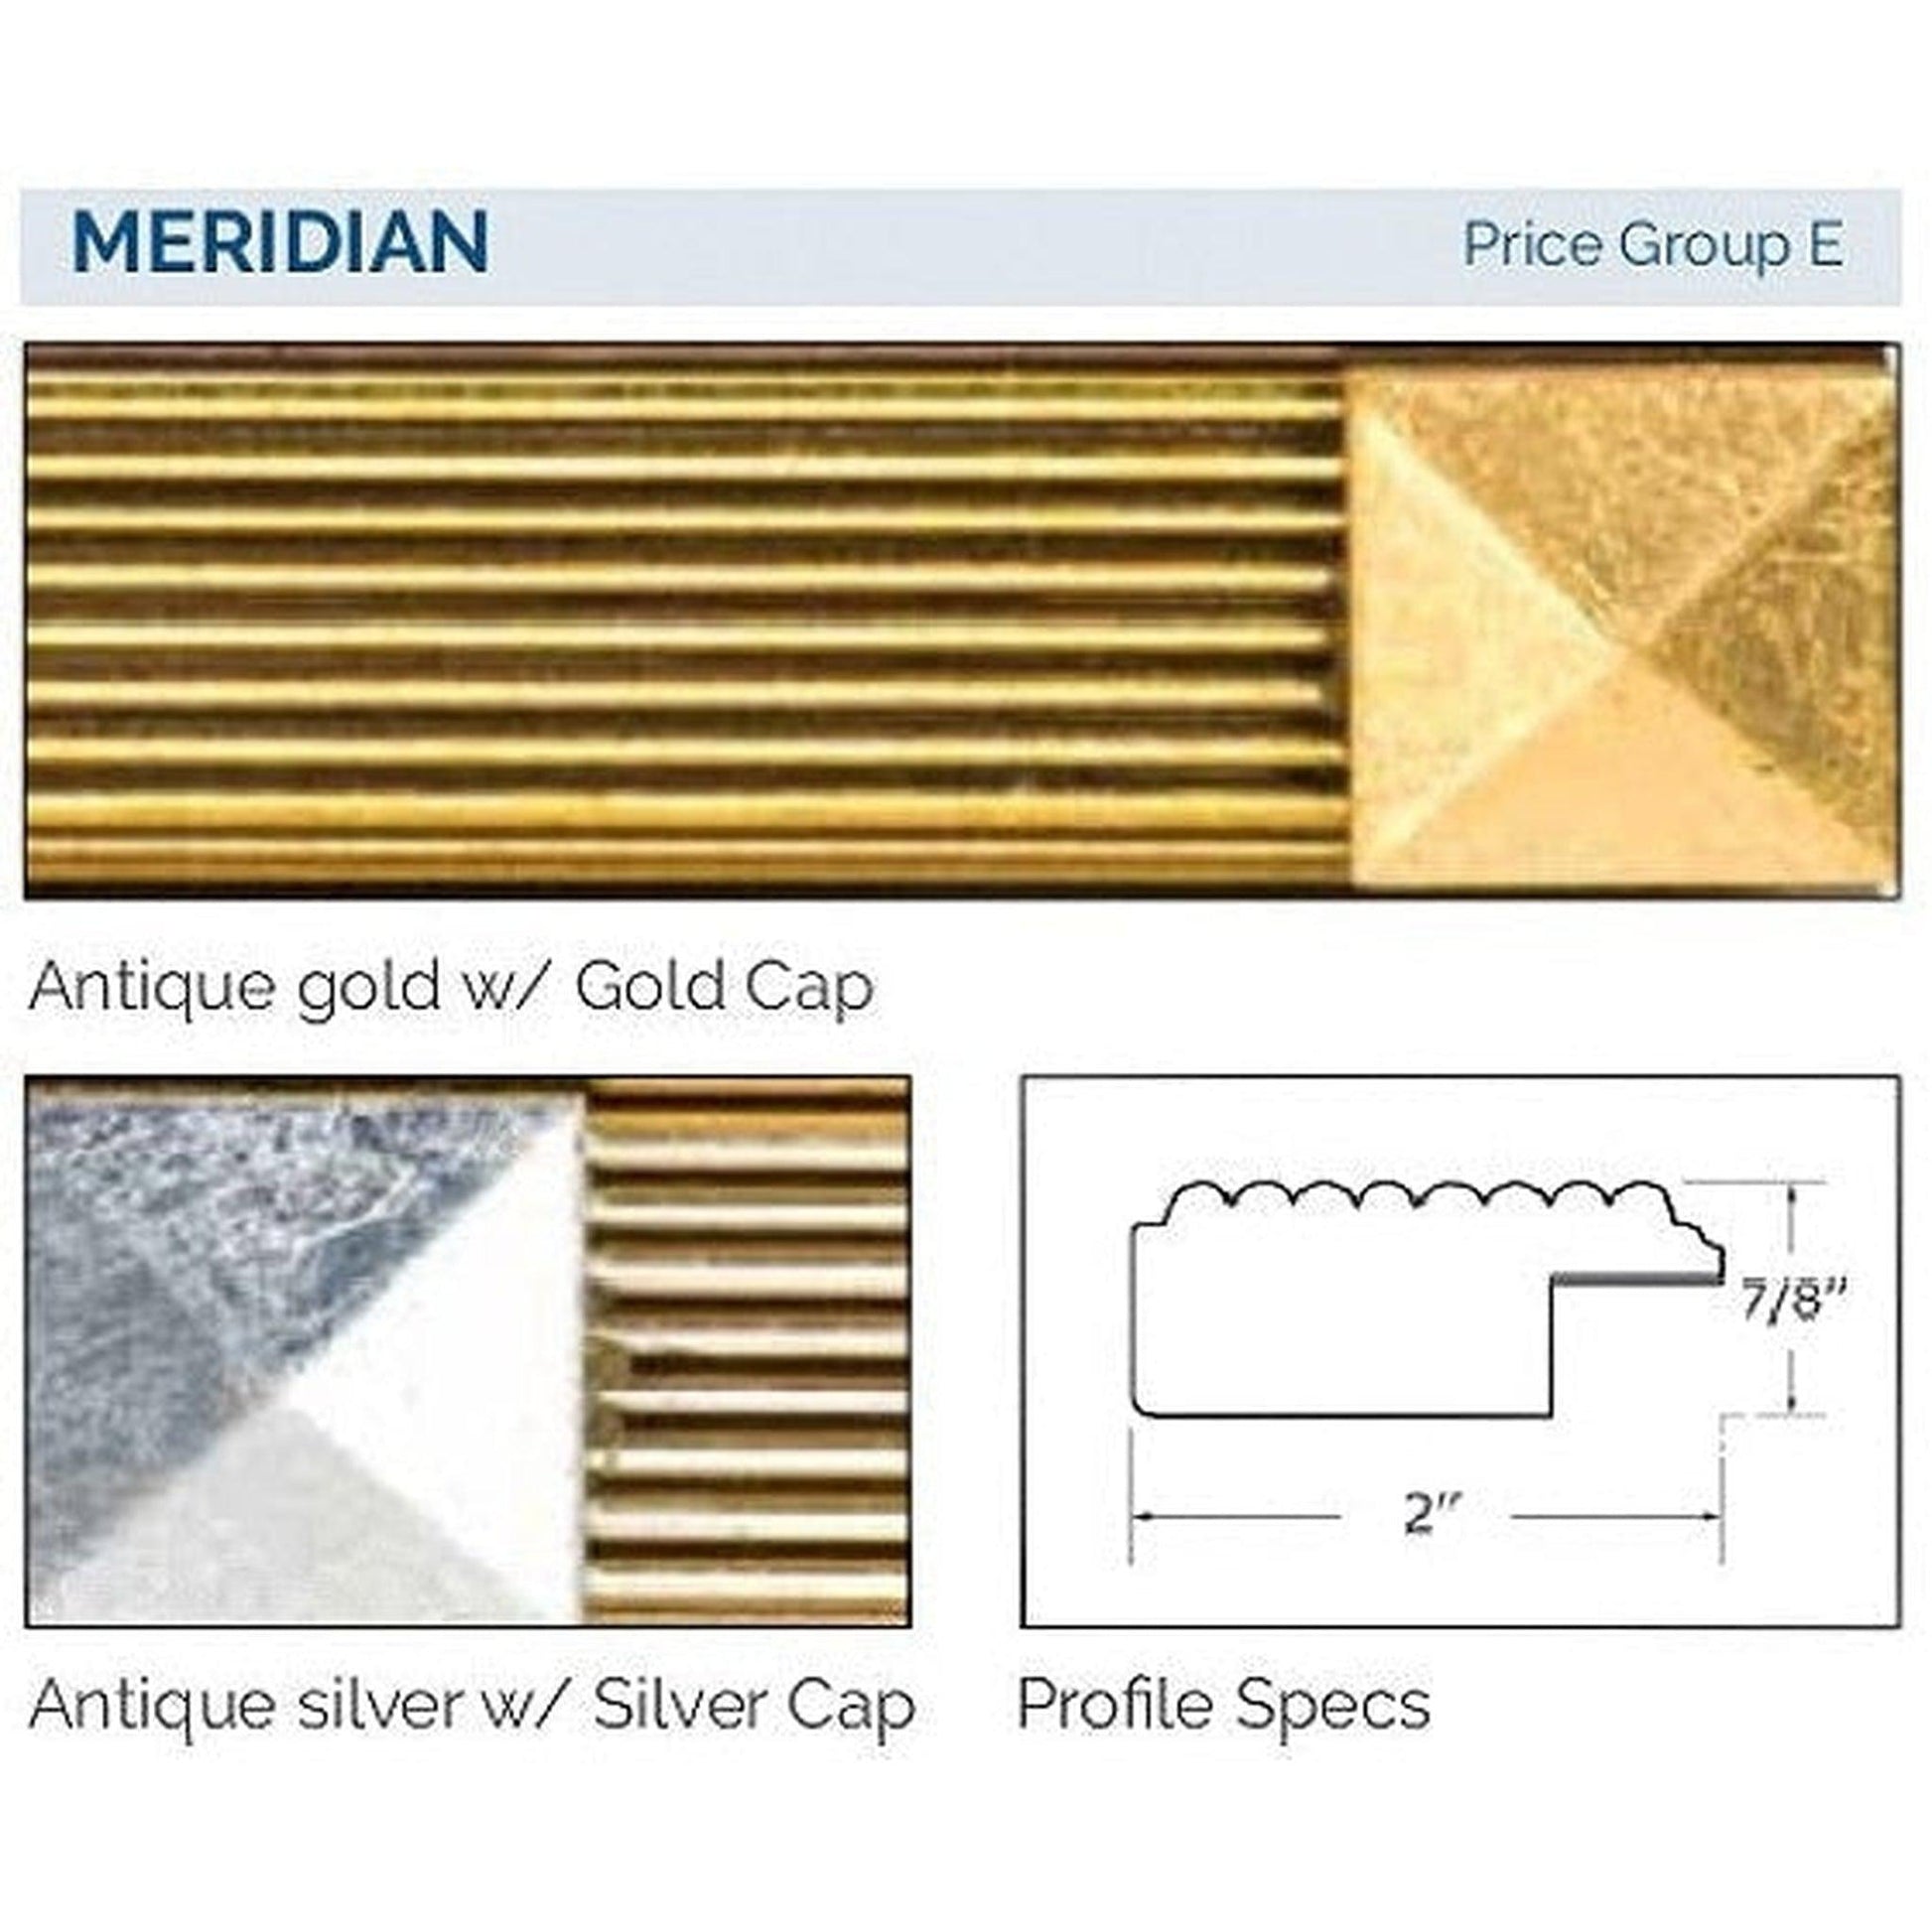 Afina Signature 63" x 36" Meridian Antique Gold With Antique Silver Caps Recessed Four Door Medicine Cabinet With Beveled Edge Mirror